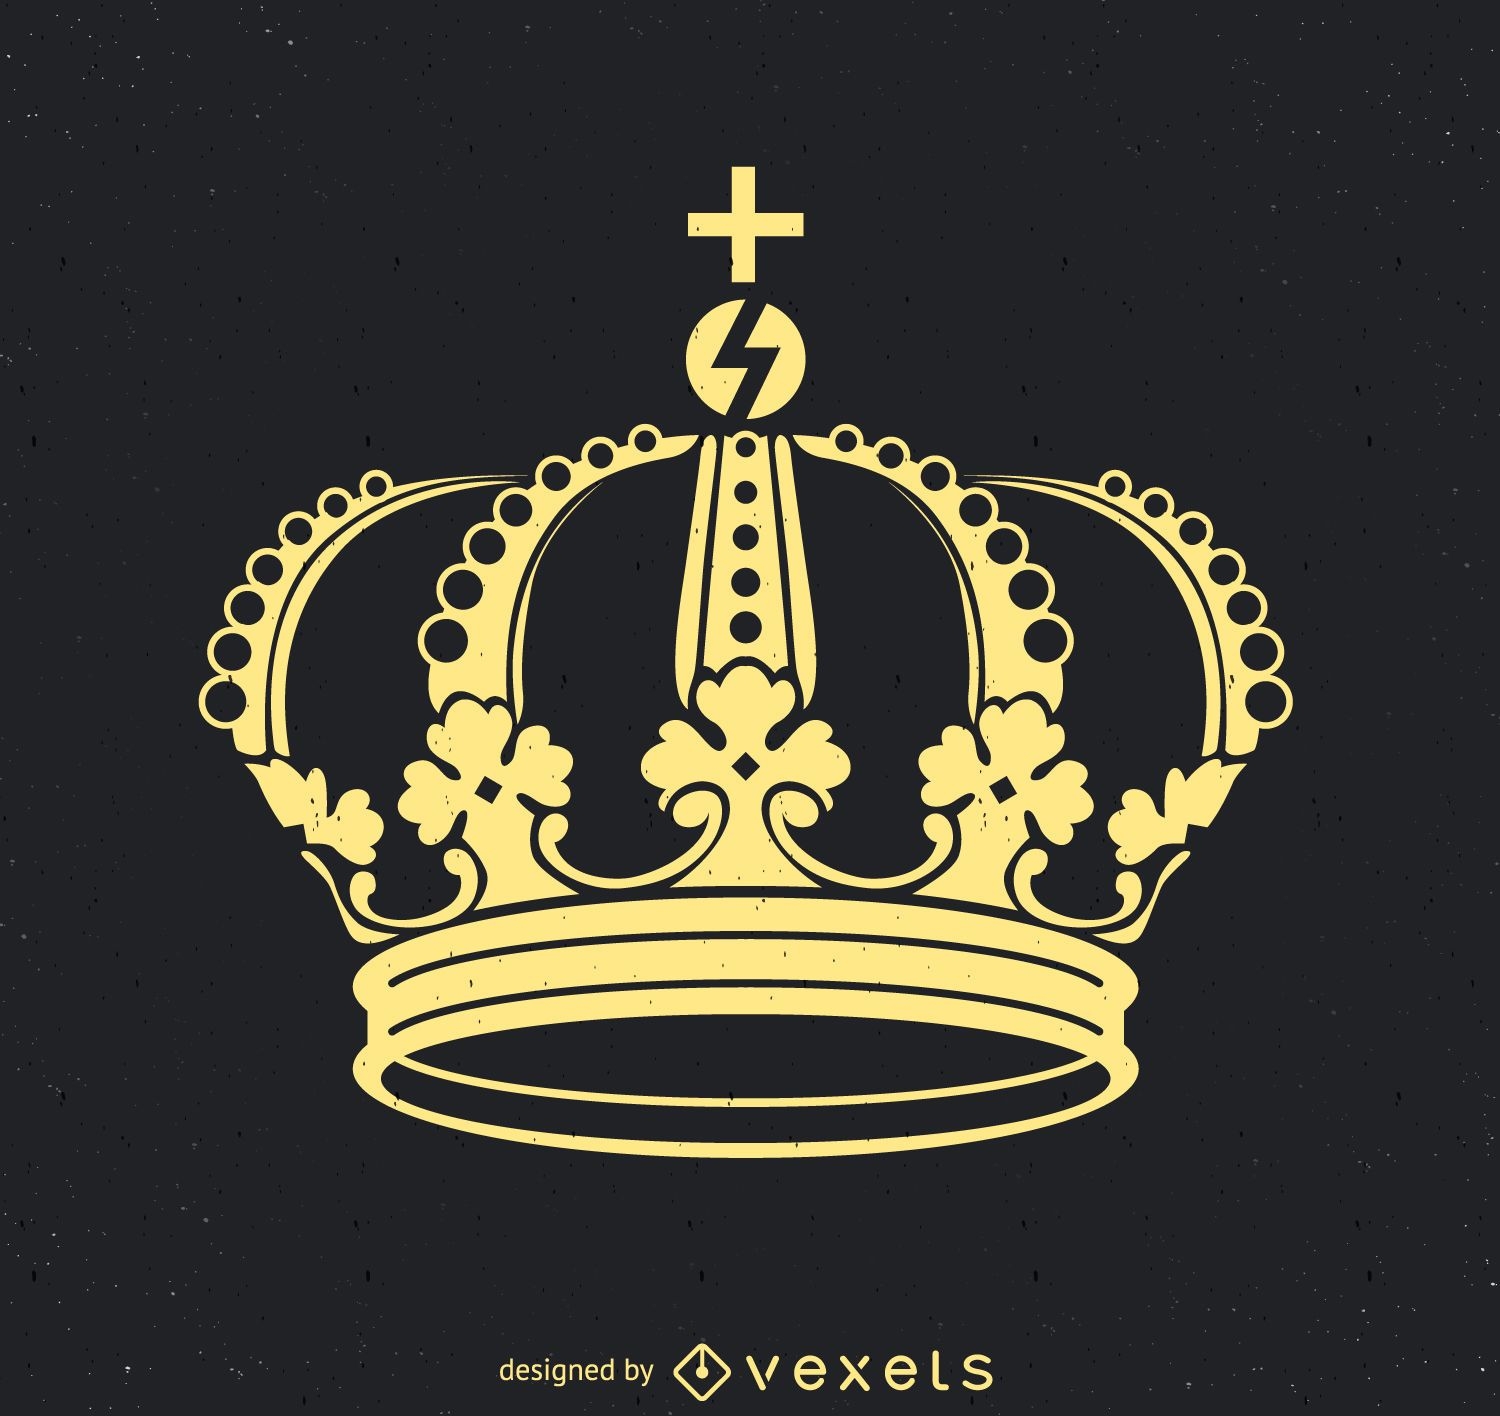 Flat Royal crown illustration